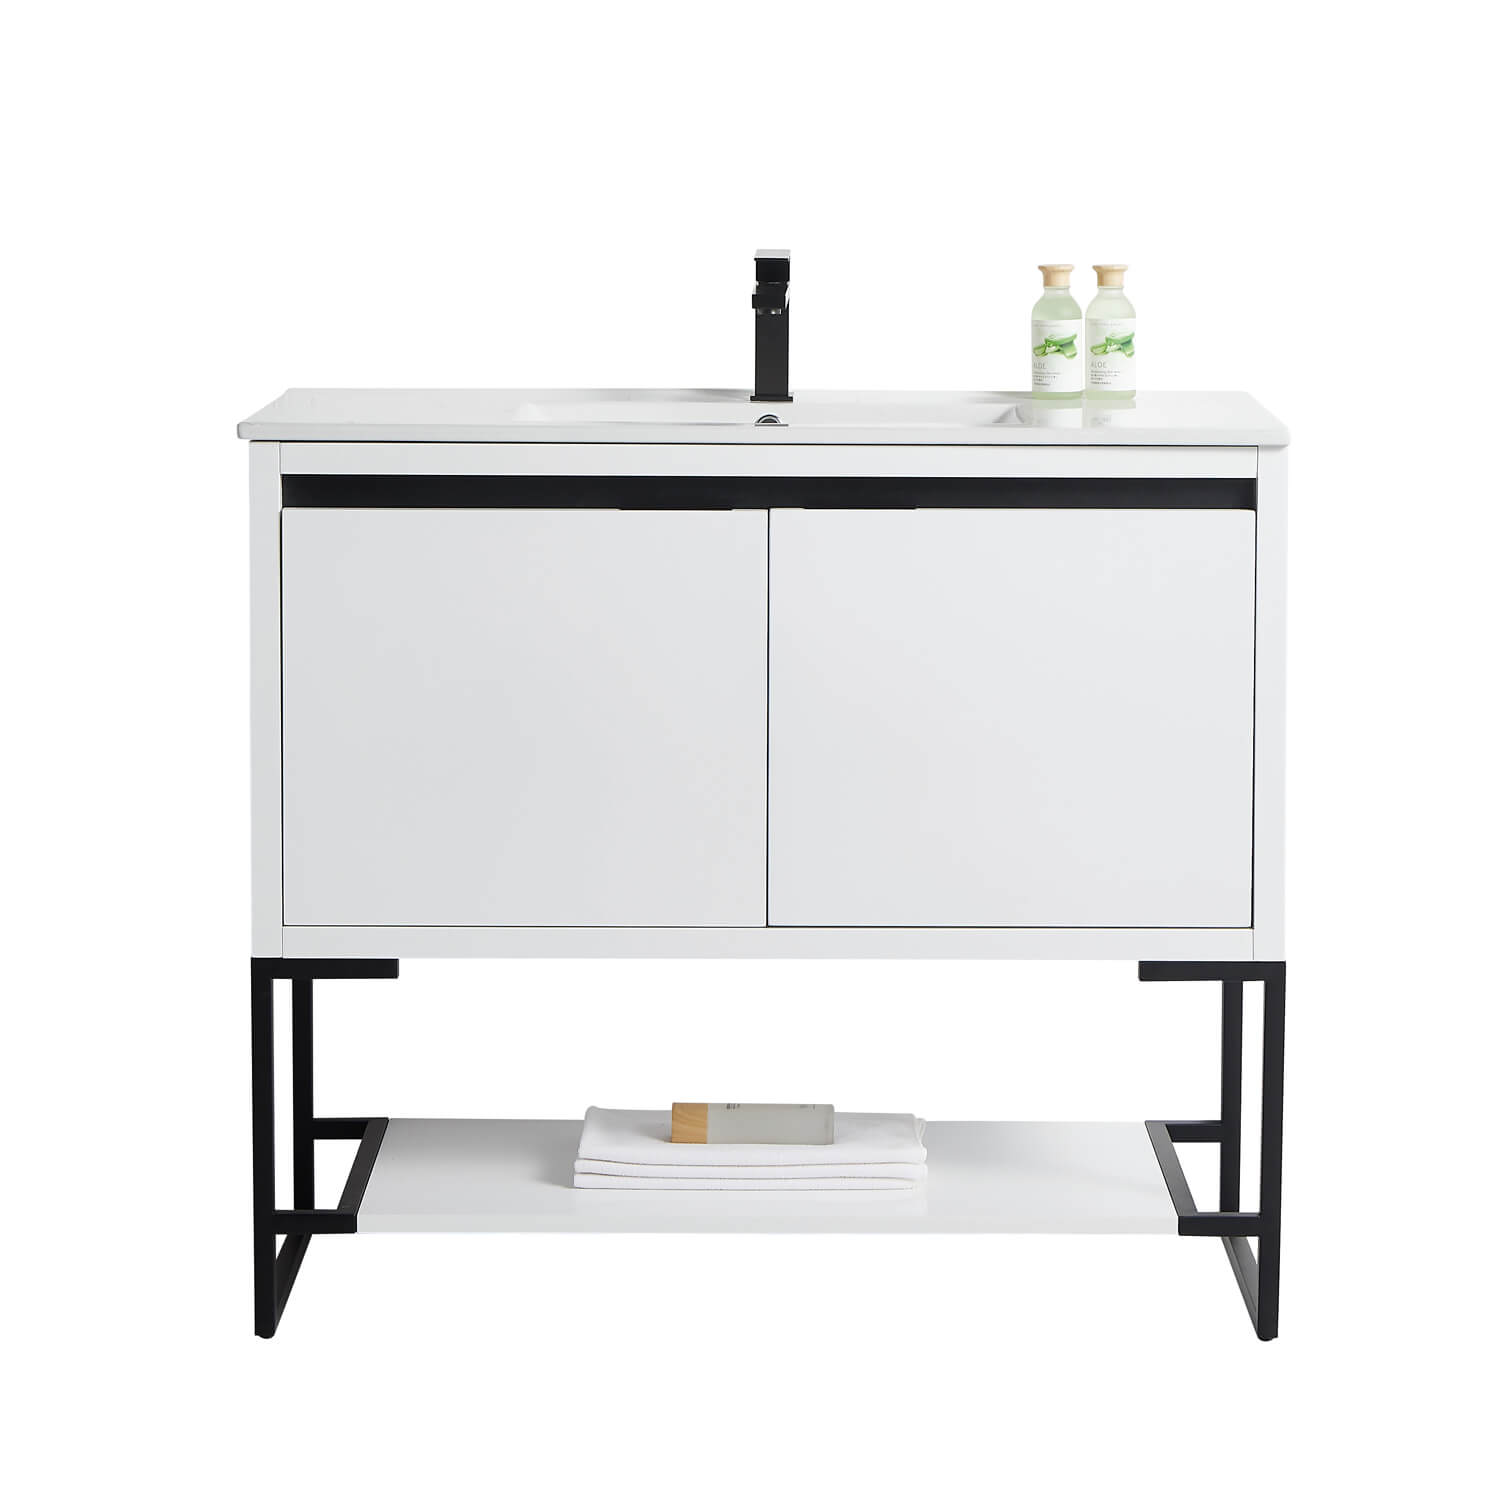 CASAINC 40-in Freestanding Single Sink Bathroom Vanity in White with White Ceramic Top-Casainc Canada